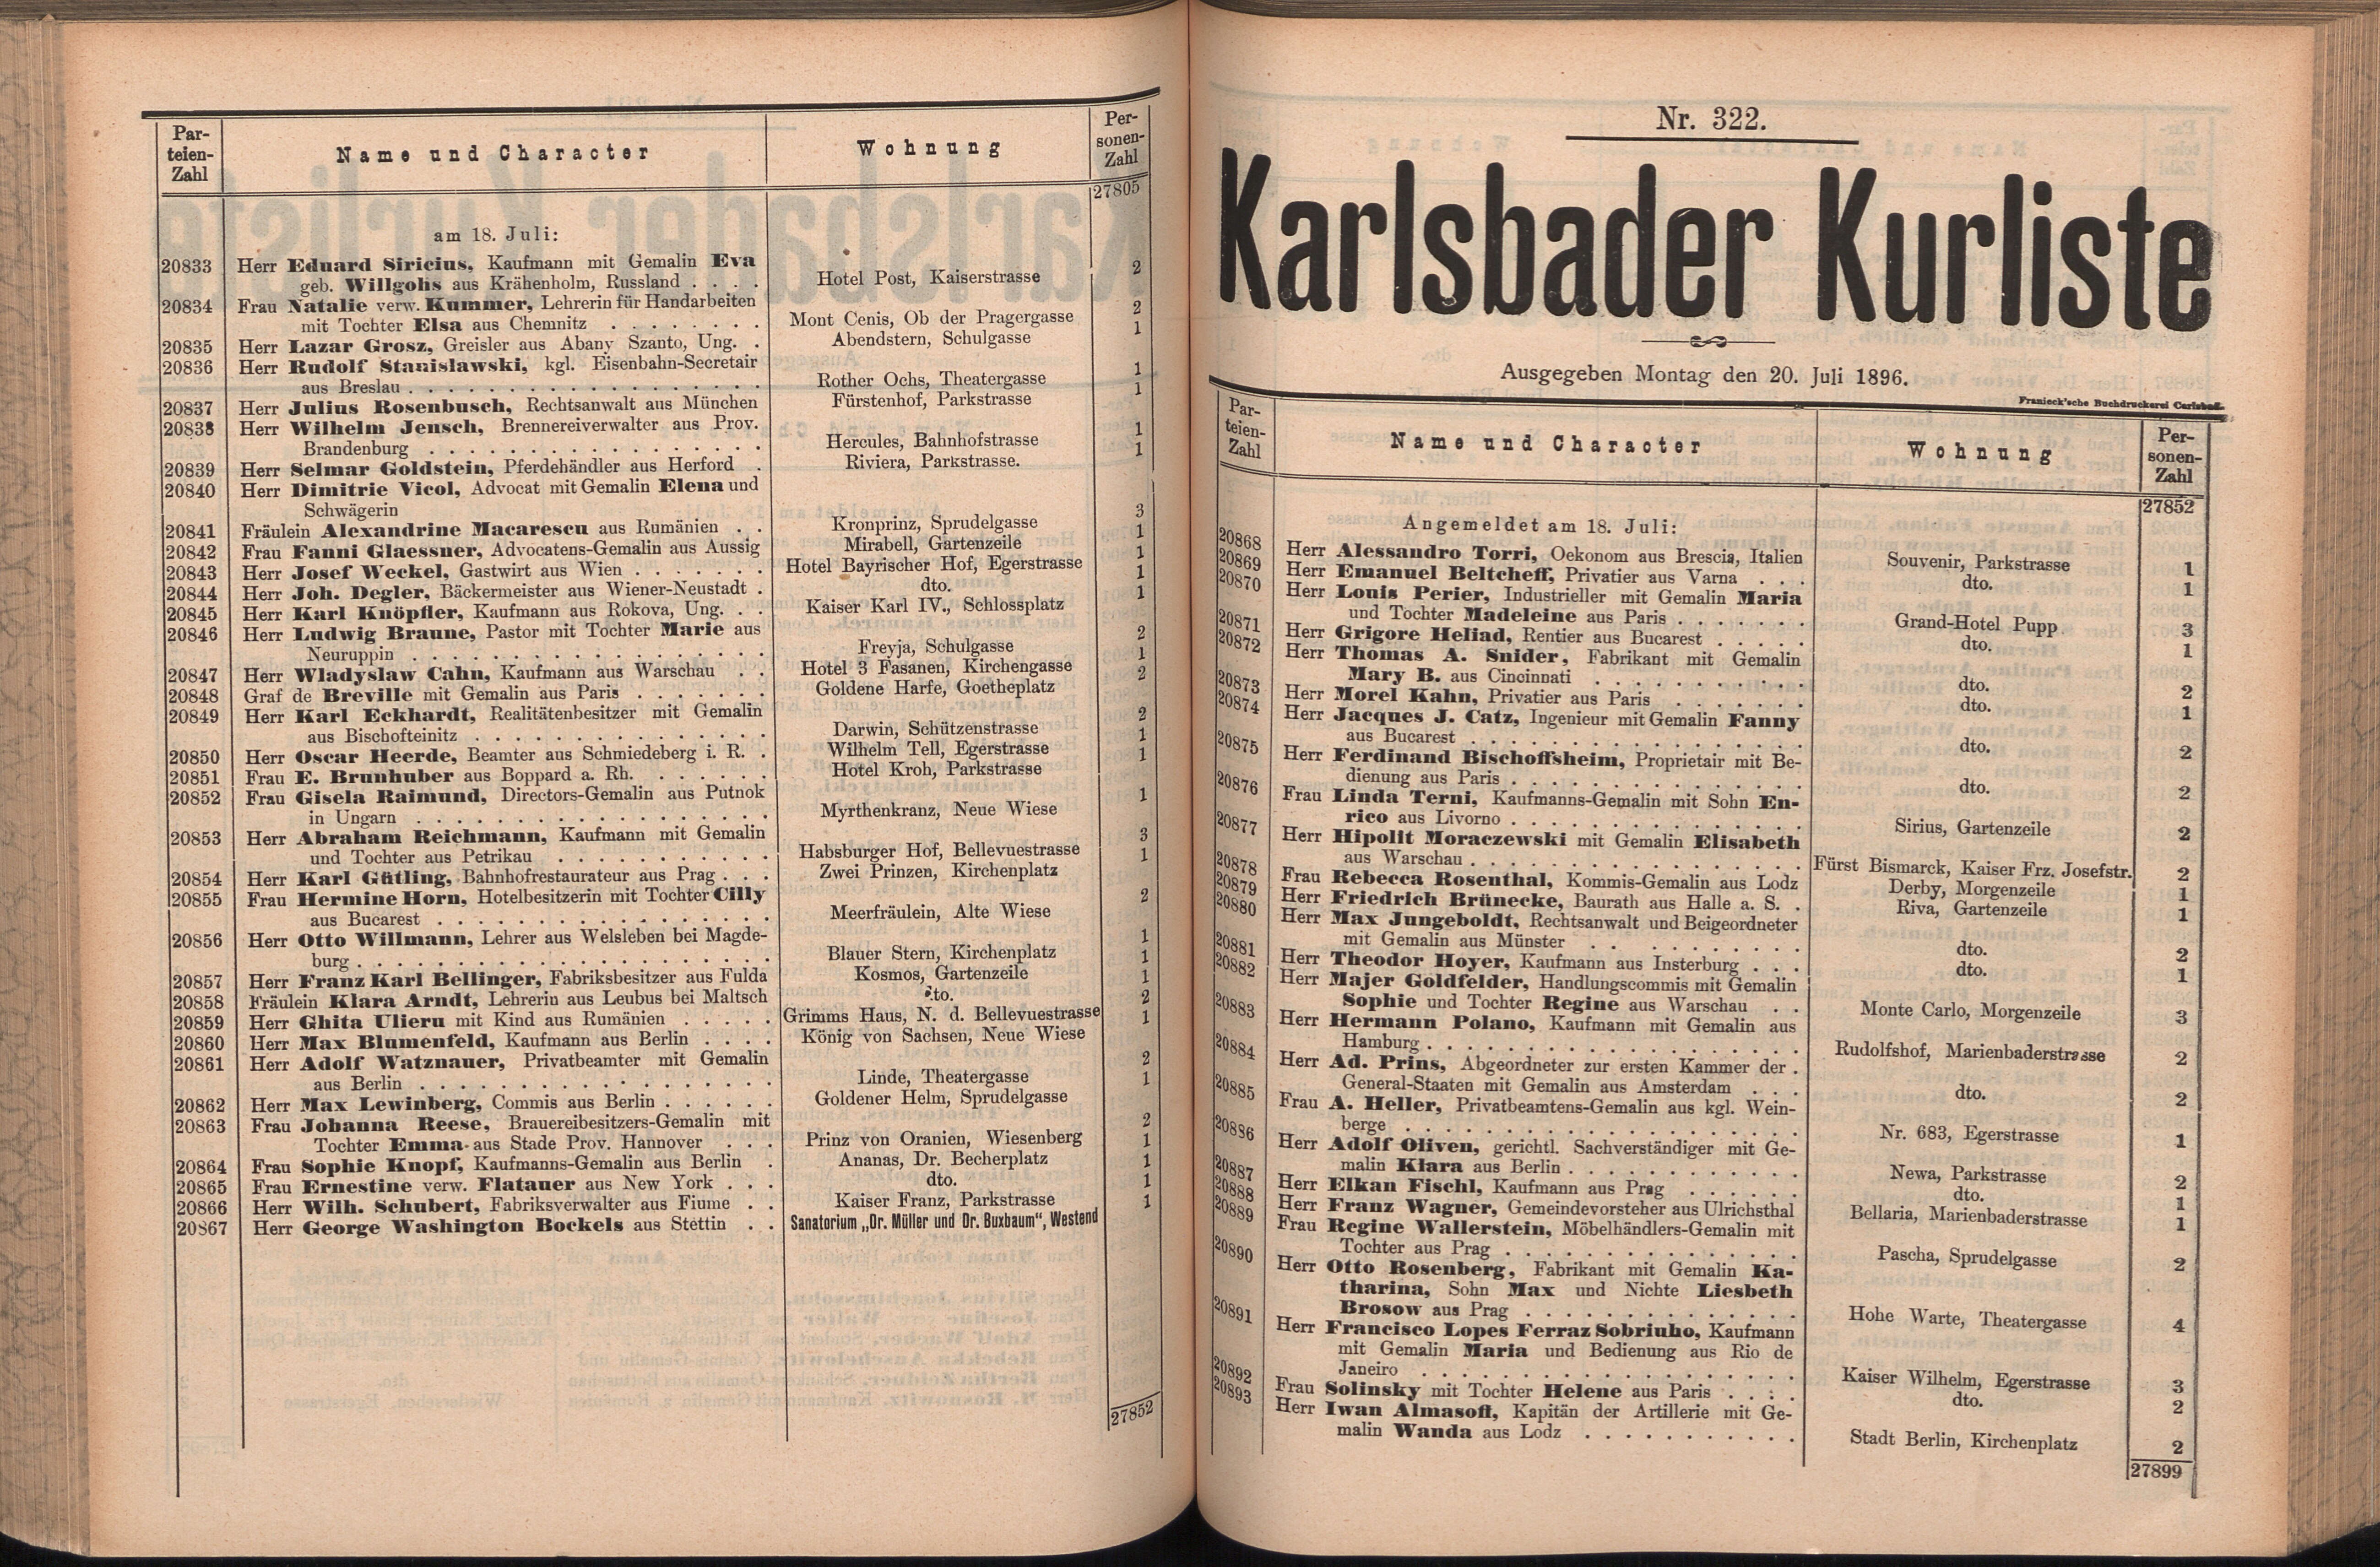 394. soap-kv_knihovna_karlsbader-kurliste-1896_3950